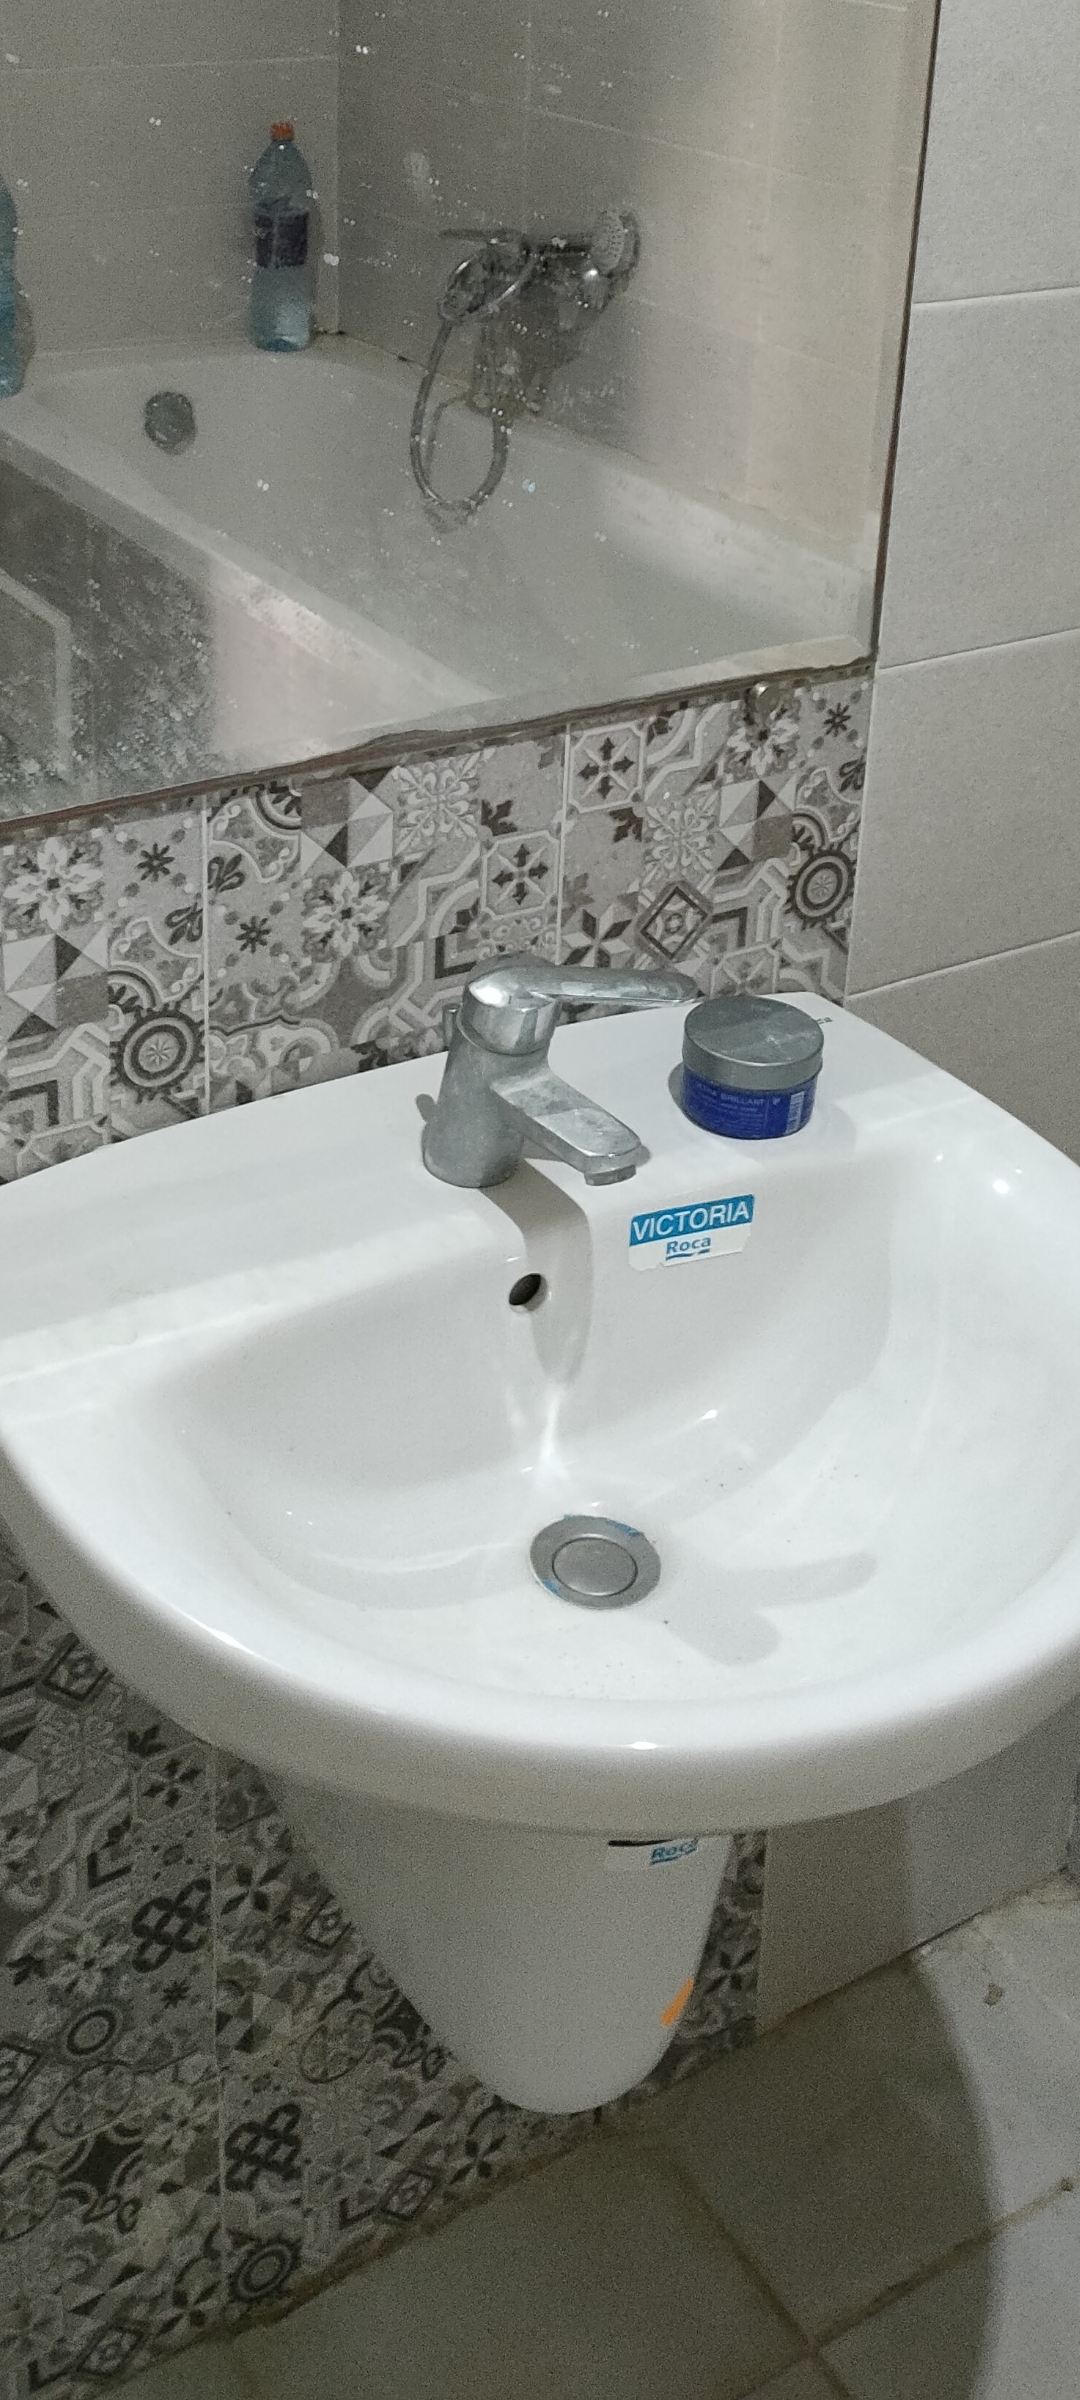 Hergla Hergla Meubles de cuisine et salle de bain Sanitaires Salle de Bains - WC Sanitaires